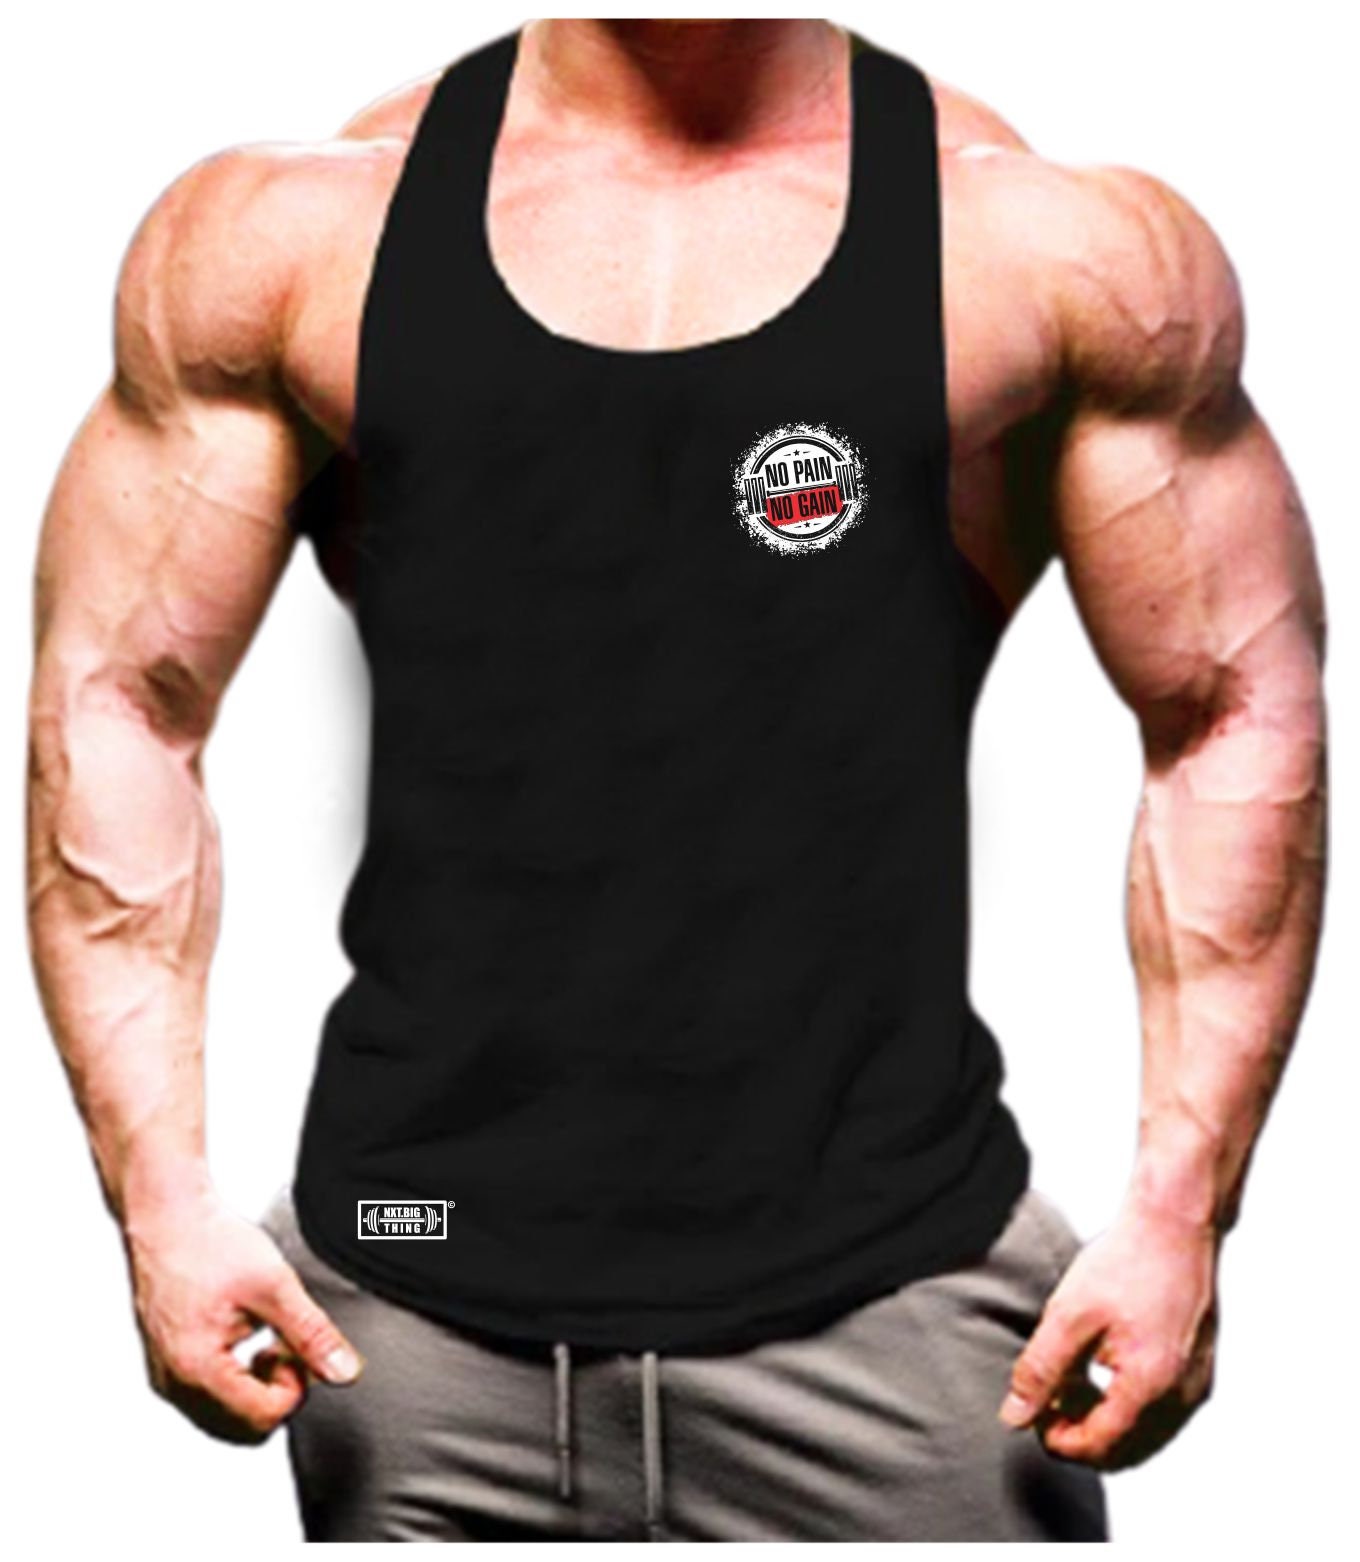 Gym Warriors Cotton Gym Tank Tops Men Sleeveless Tanktops For Boy